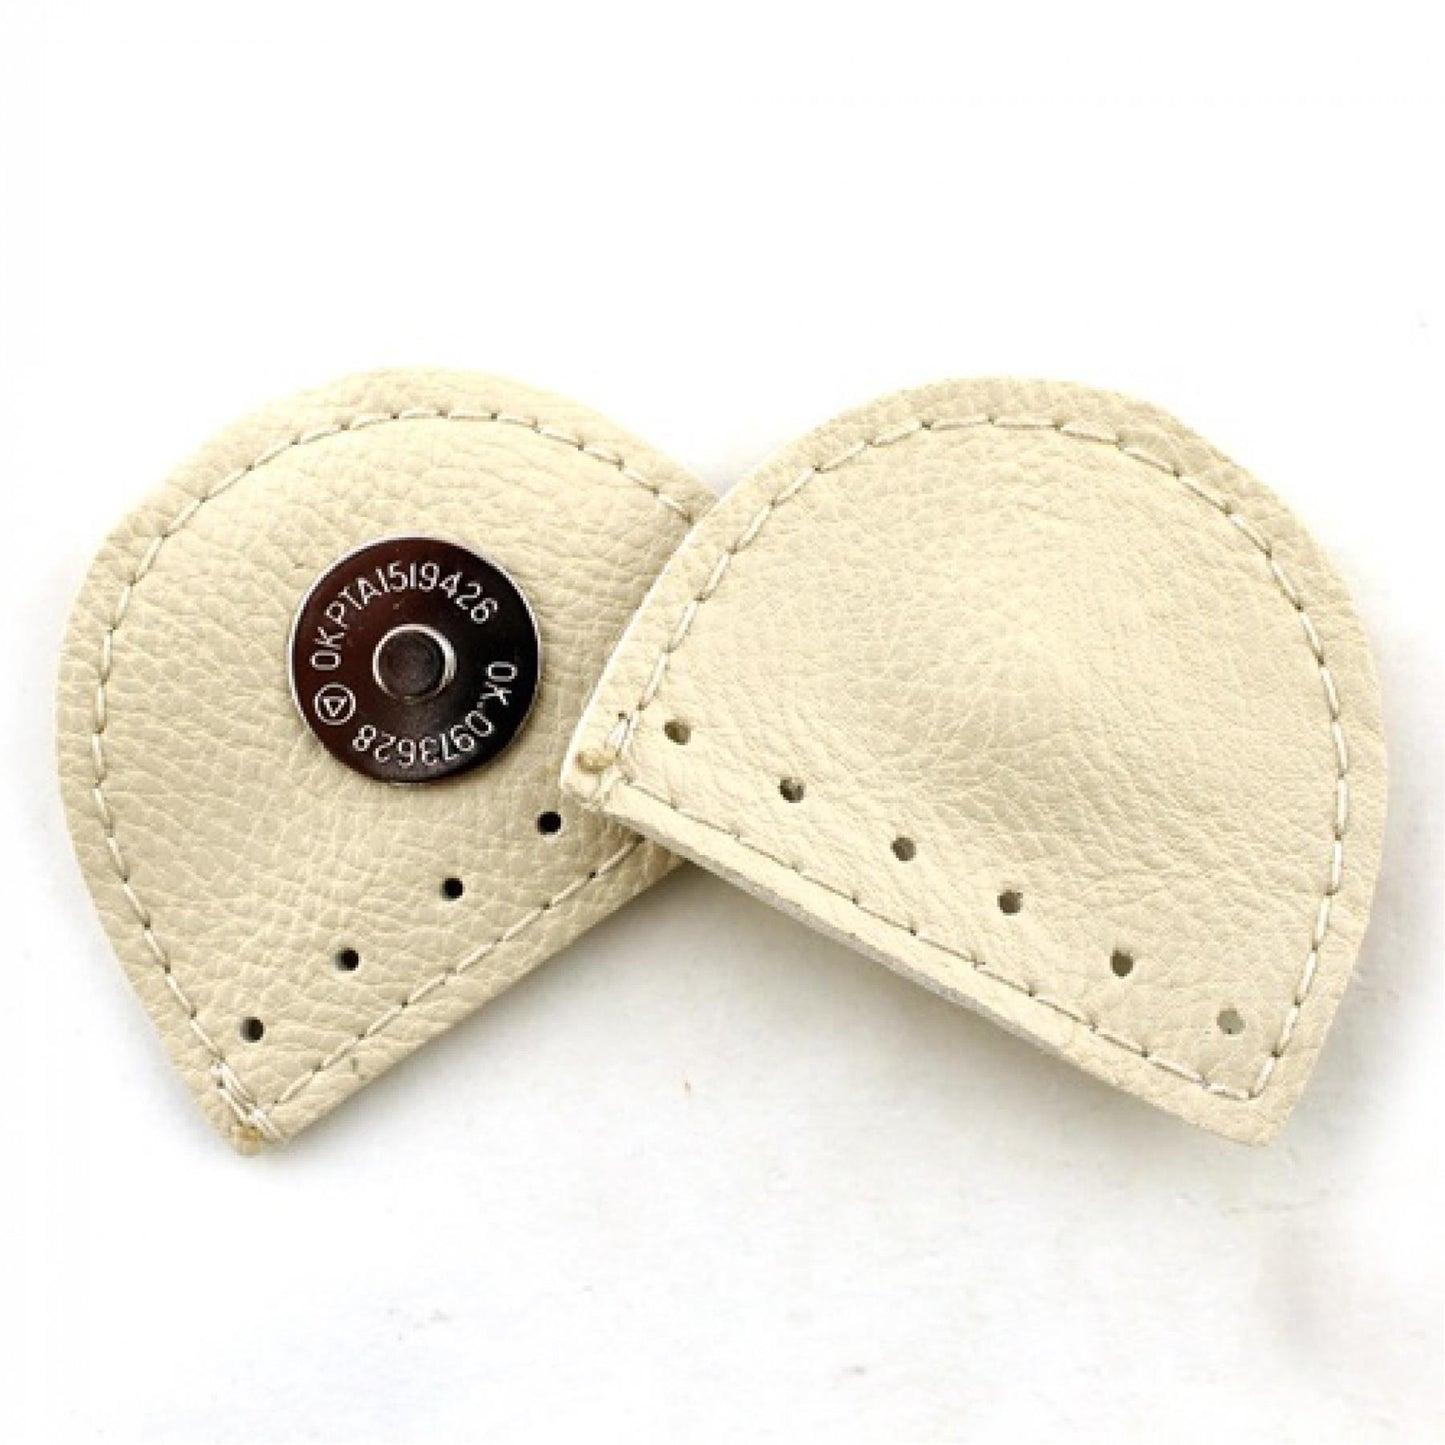 [Hoooked] MA150CREAM Vegan Leather Cream Vegan Leather Magnetic Button Bag Closure